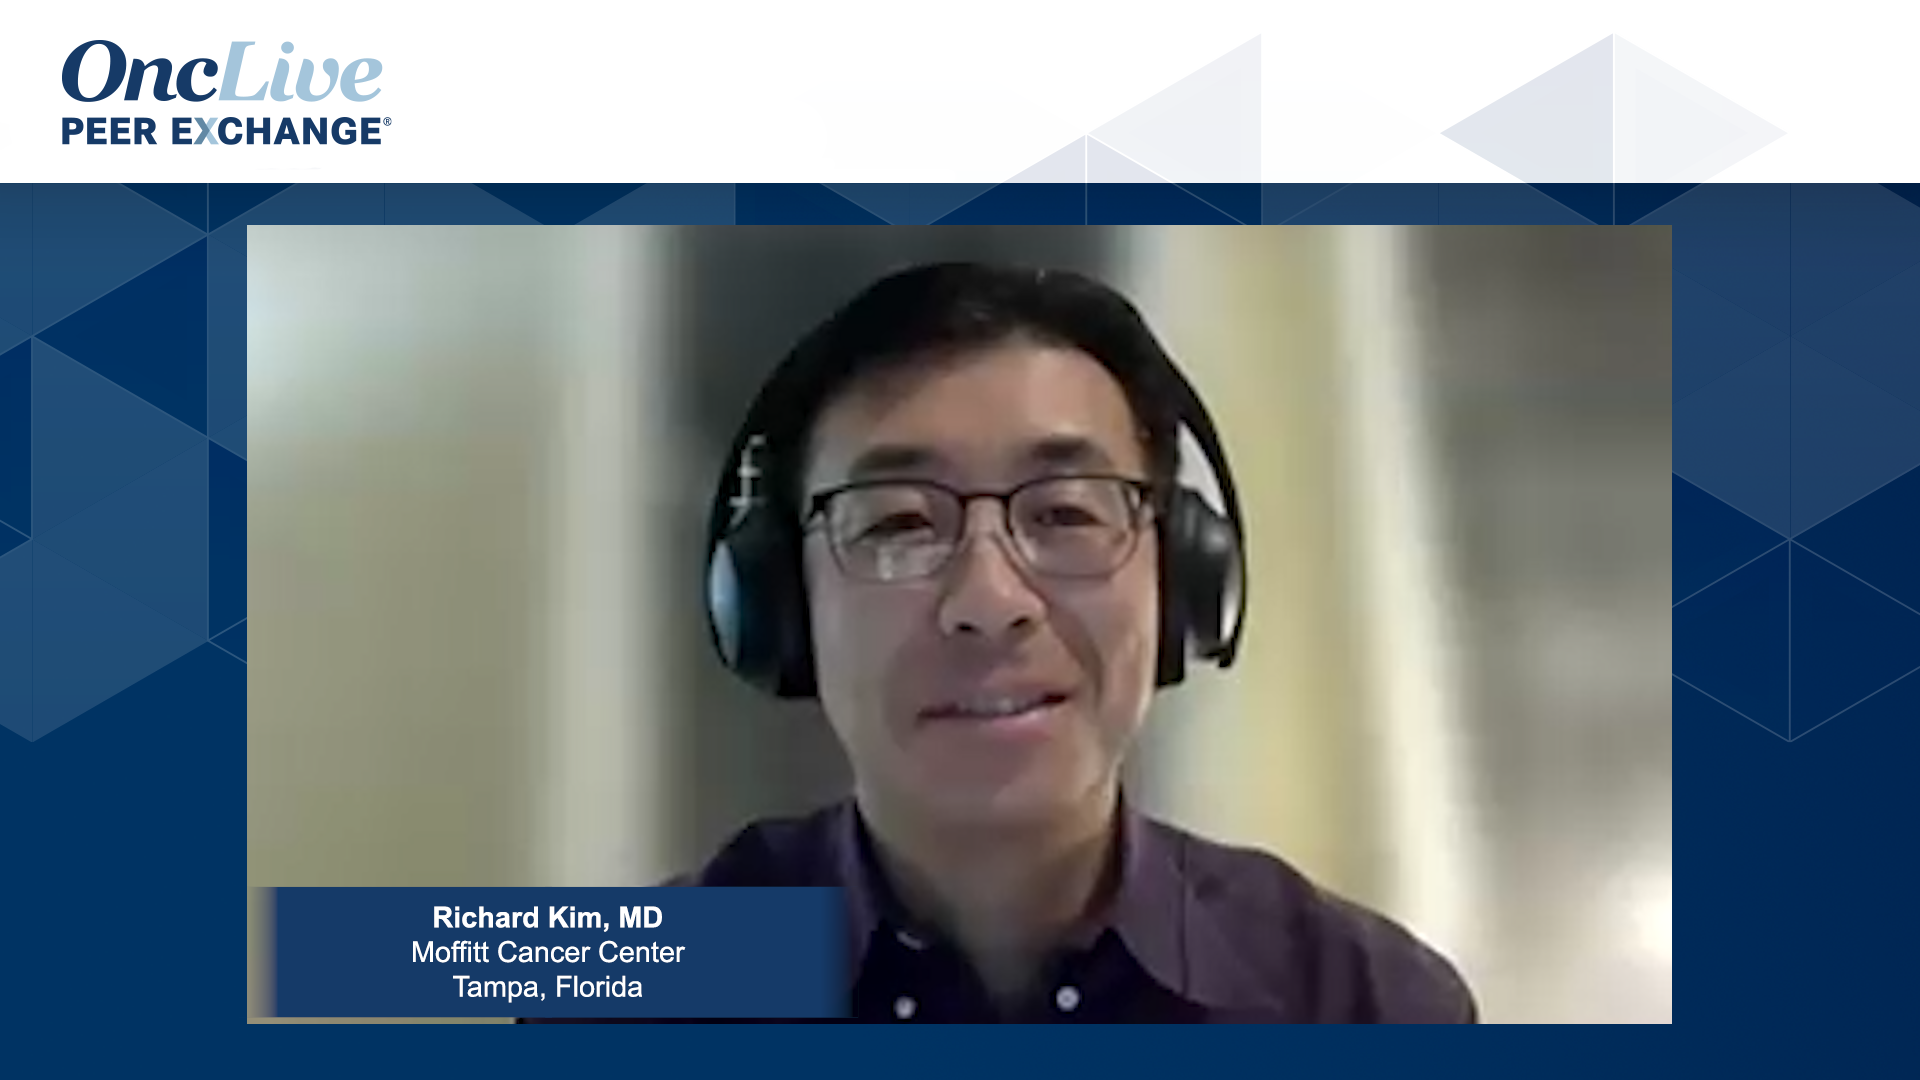 Richard Kim, MD, an expert on colorectal cancer